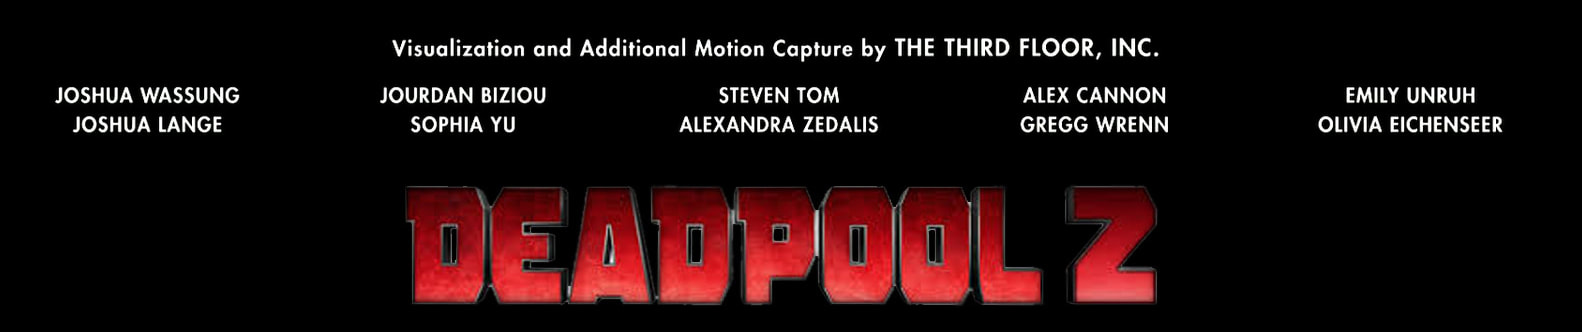 Deadpool 2 credits for The Third Floor